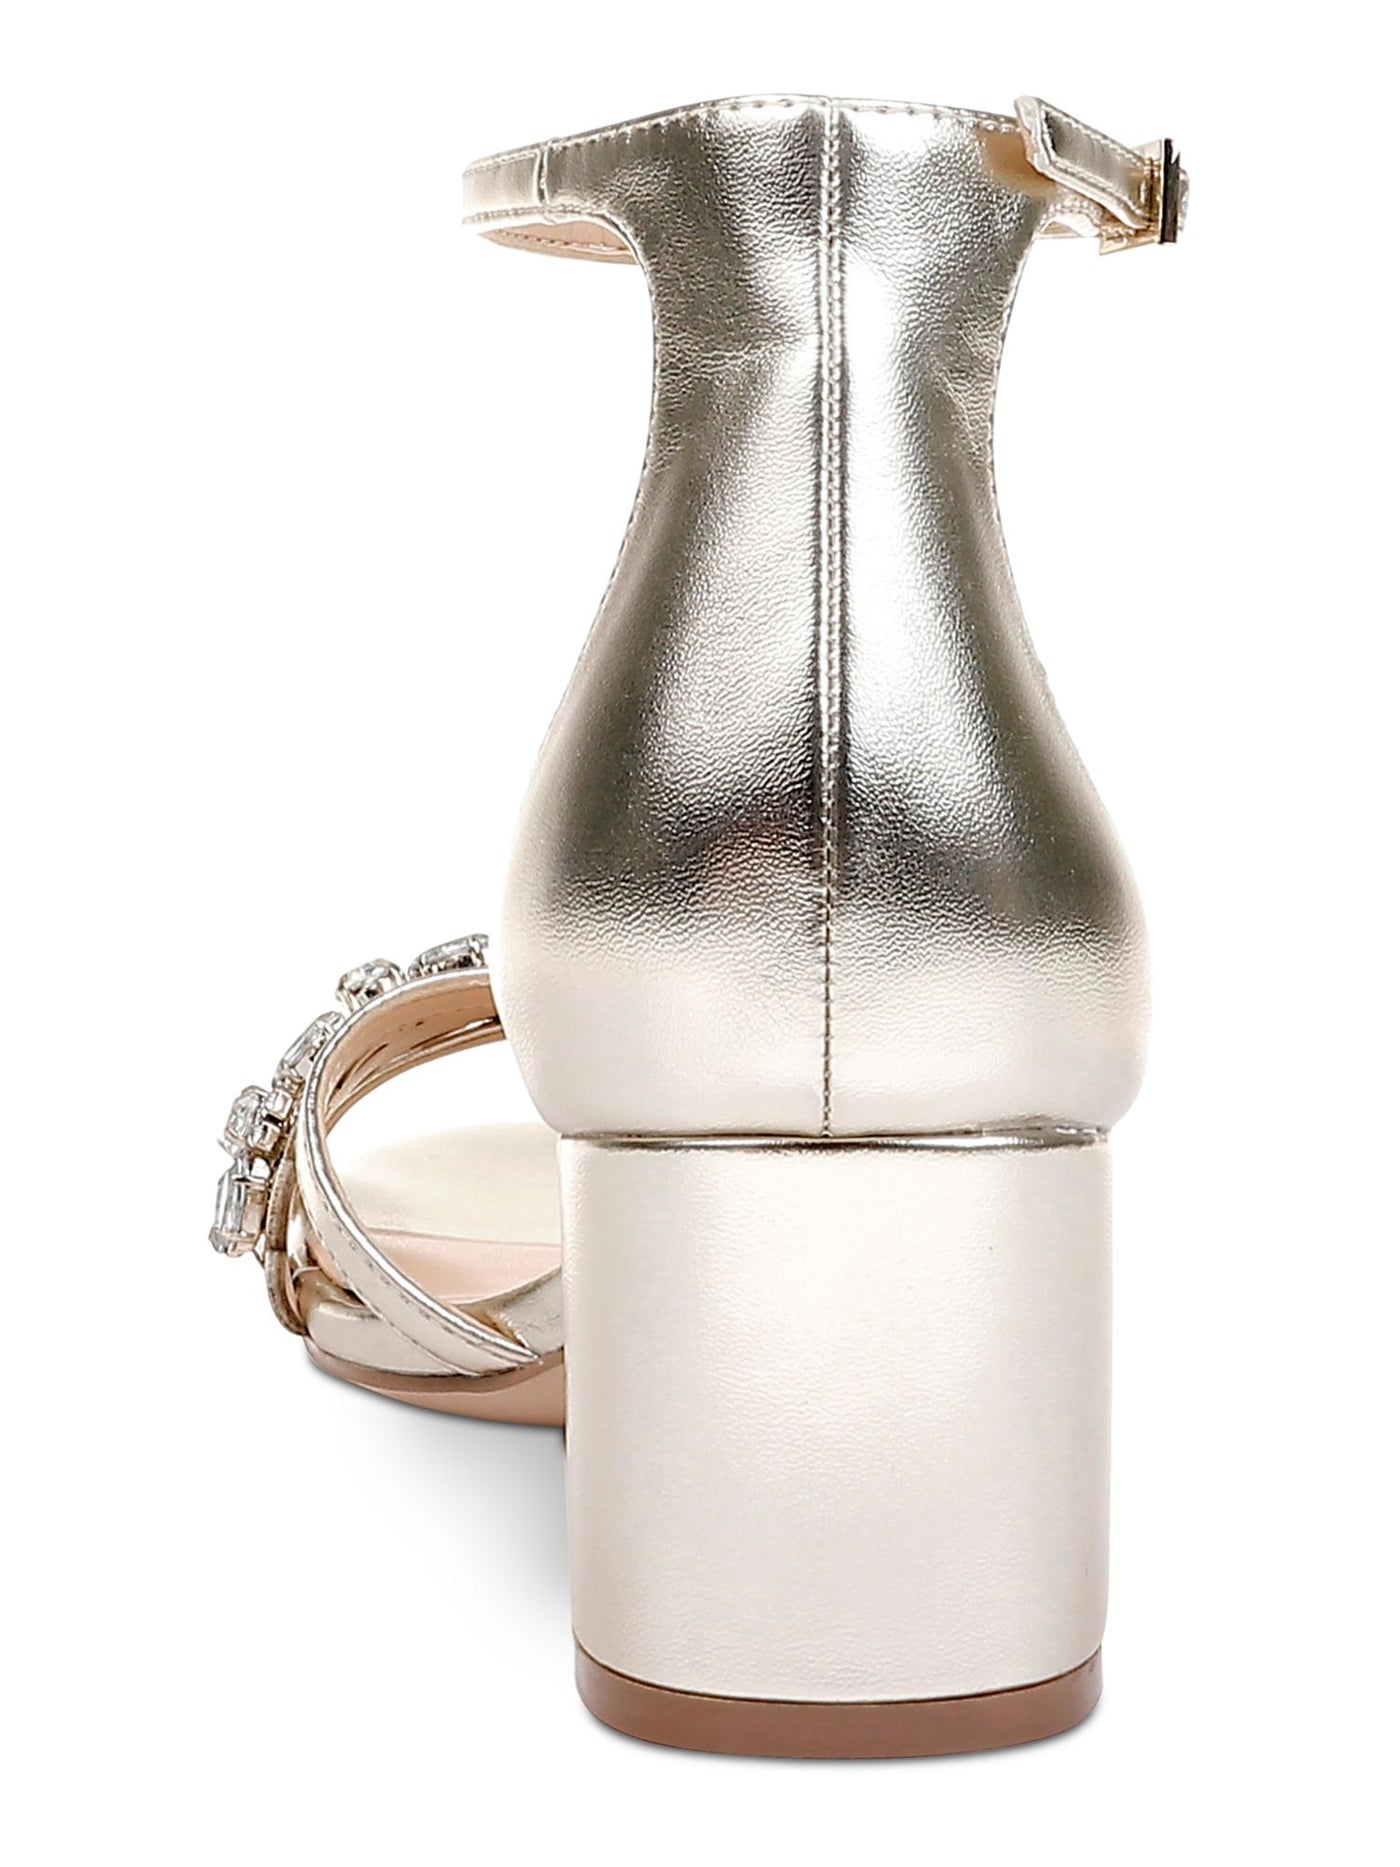 JEWEL BADGLEY MISCHKA Womens Gold Adjustable Ankle Strap Embellished Perforated Giona Round Toe Block Heel Buckle Dress Slingback Sandal 6 M